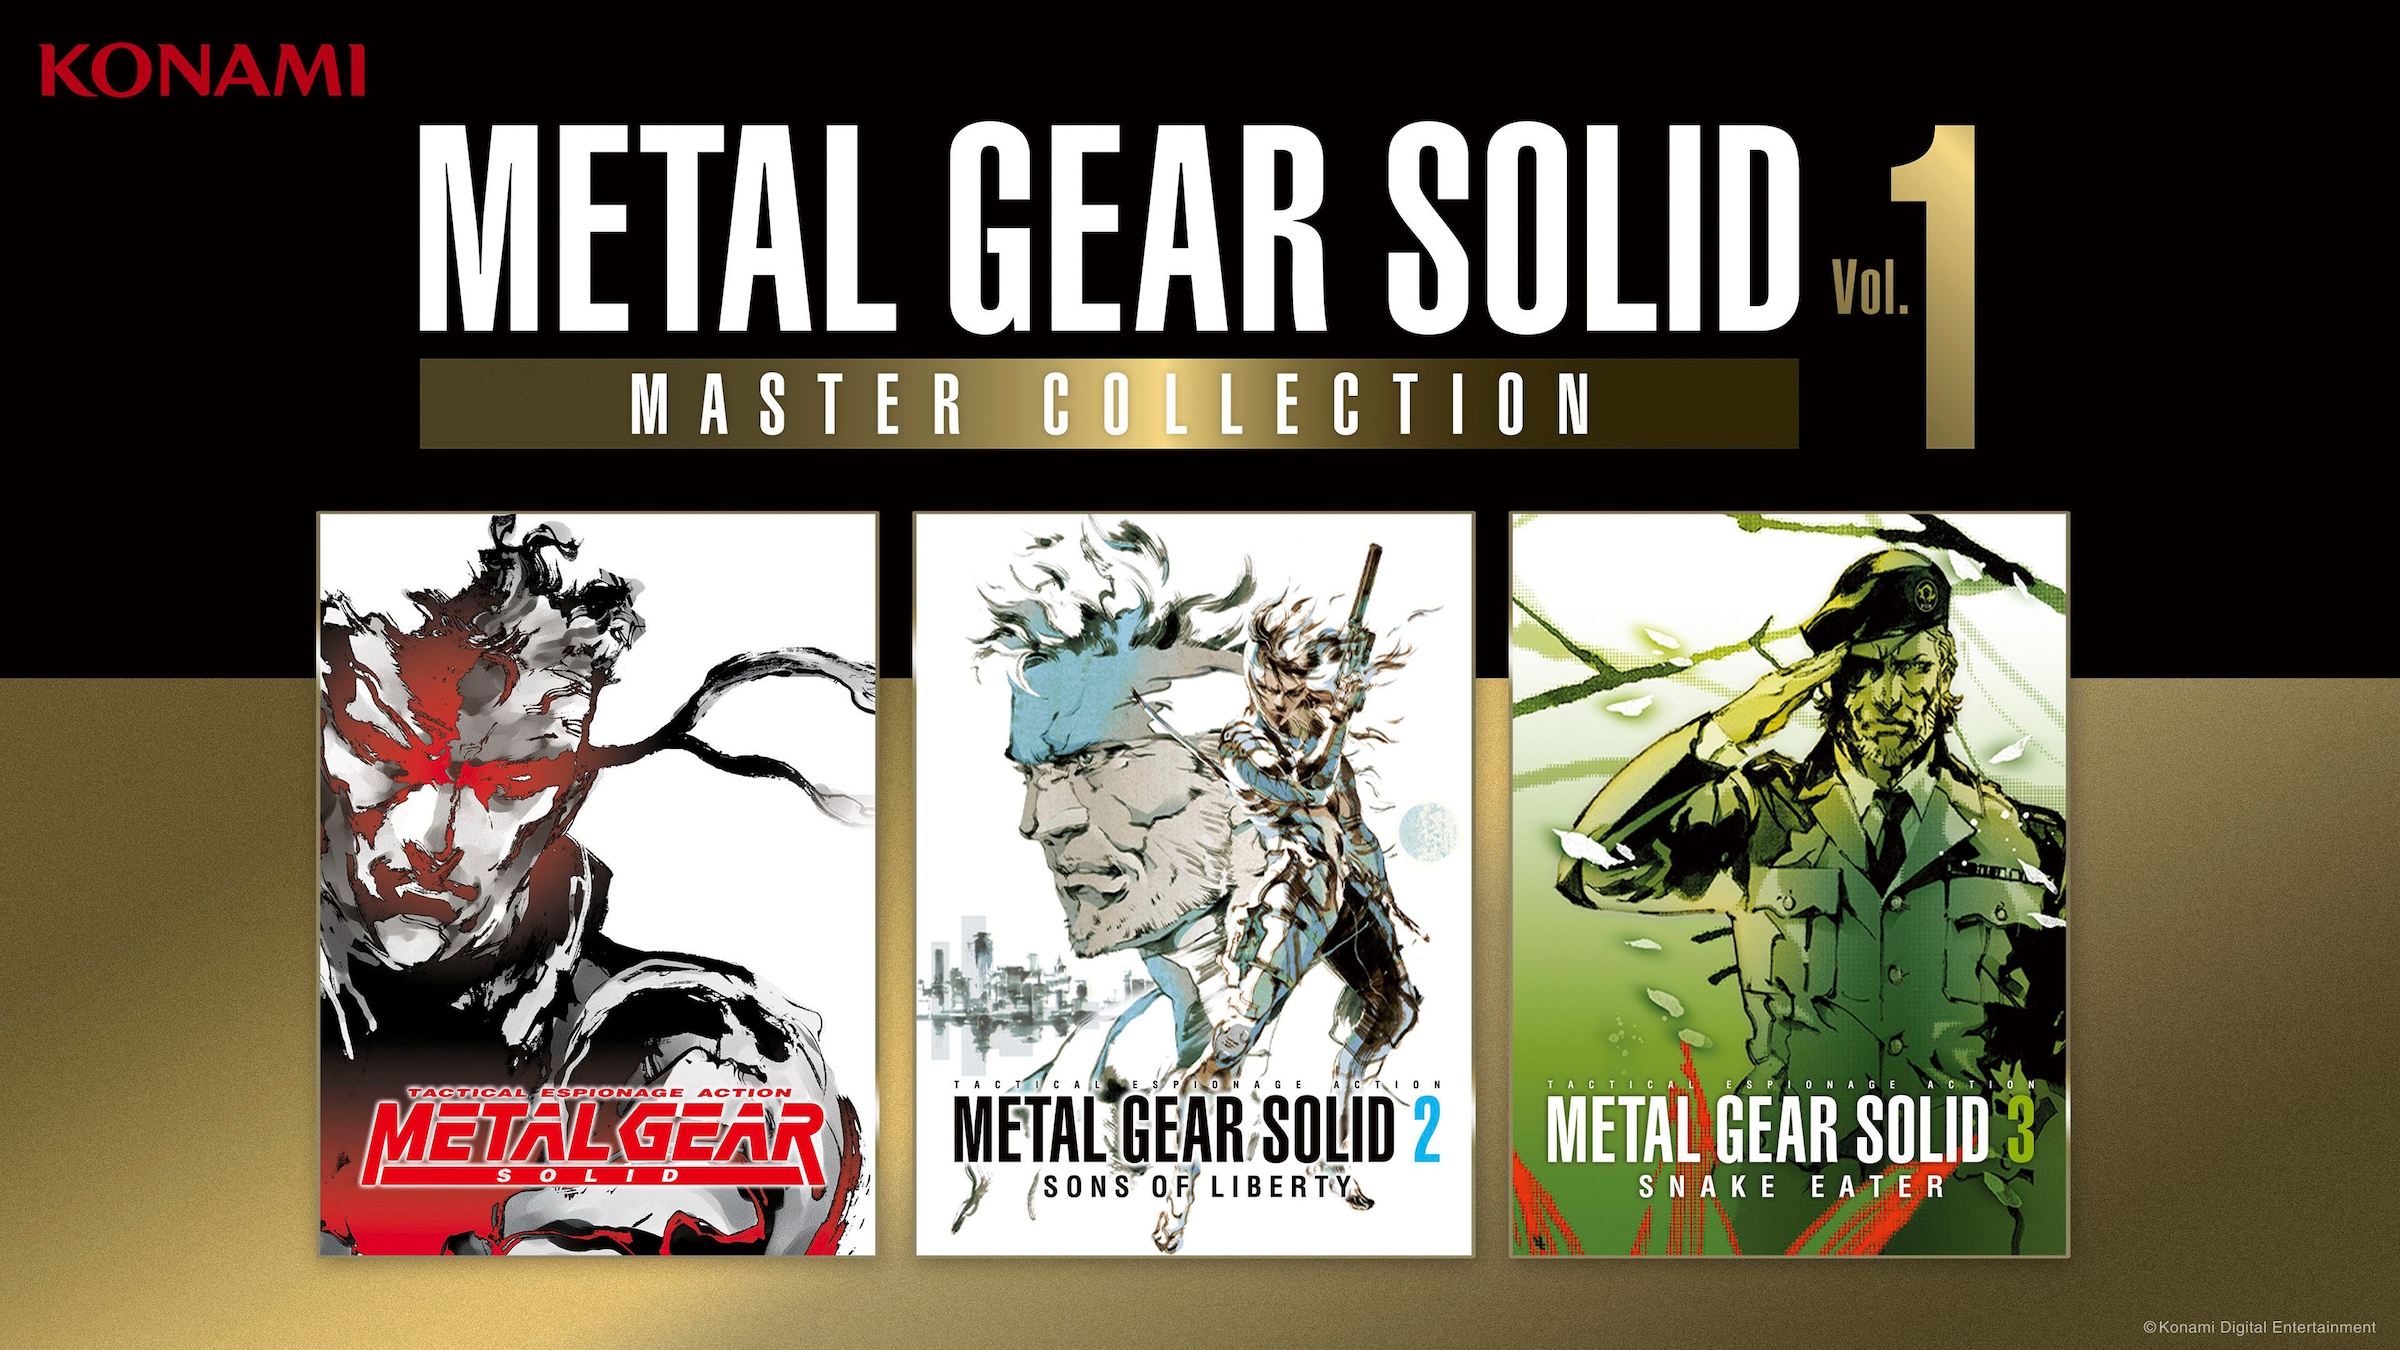 Konami Spielesoftware »Metal Gear Solid Master Collection Vol. 1«, Nintendo Switch